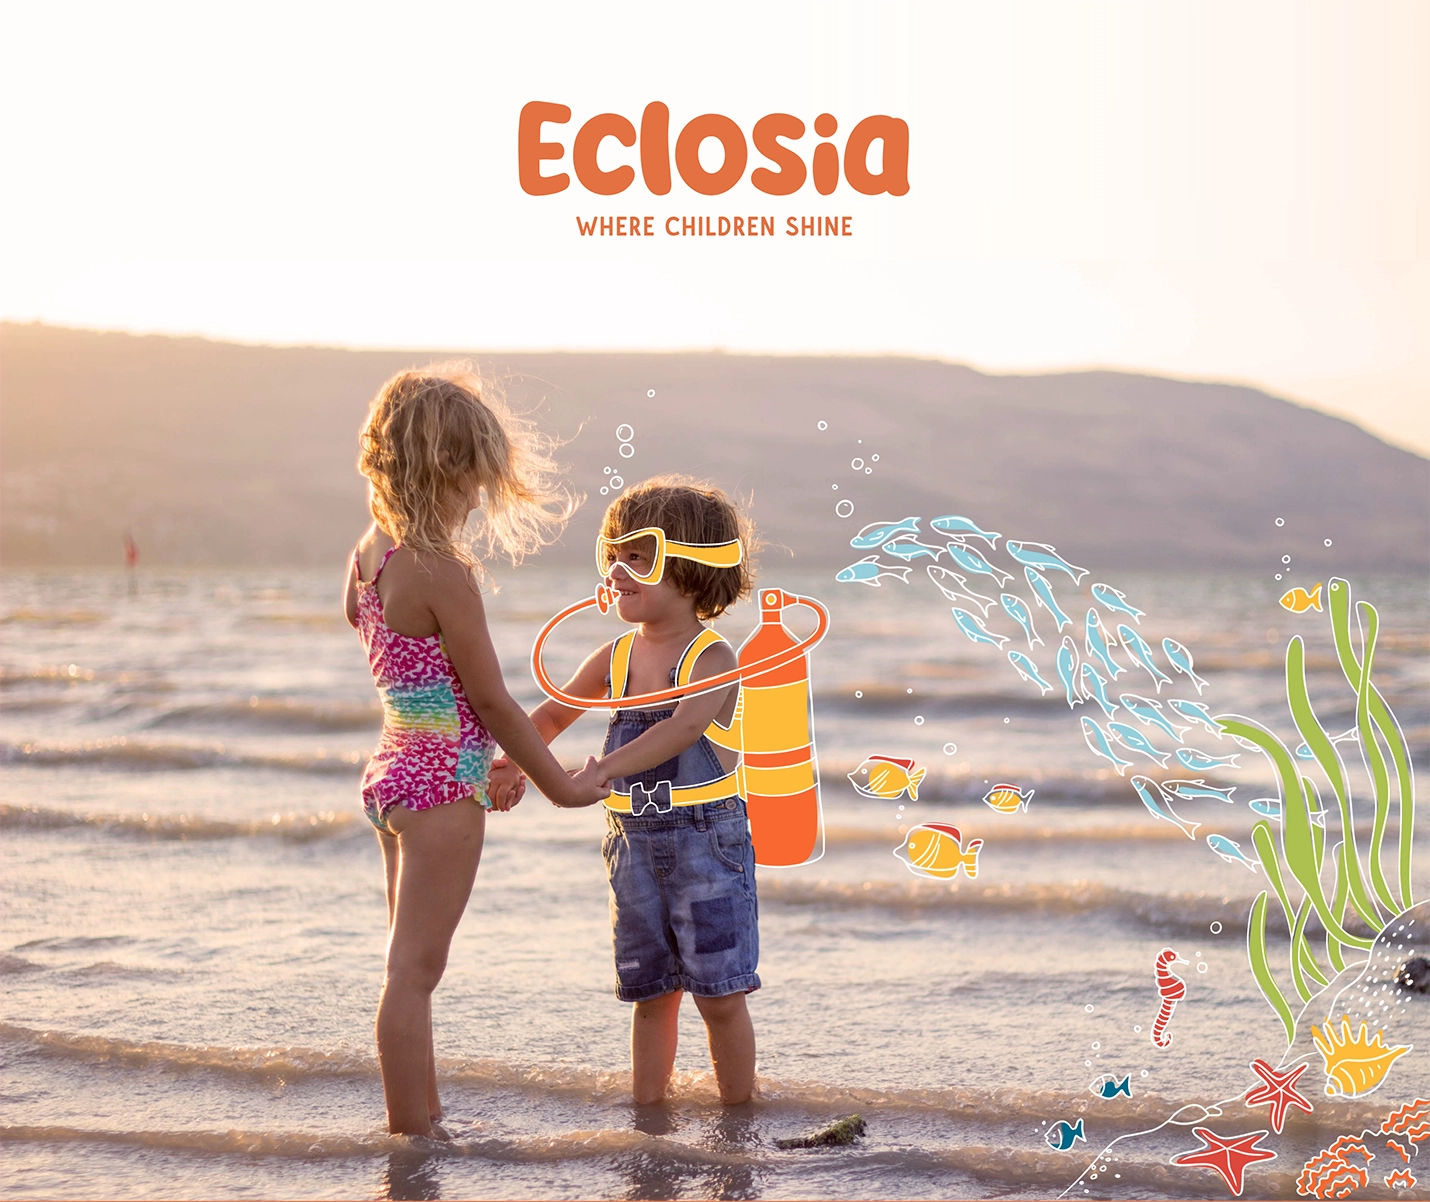 Eclosia visual showcased